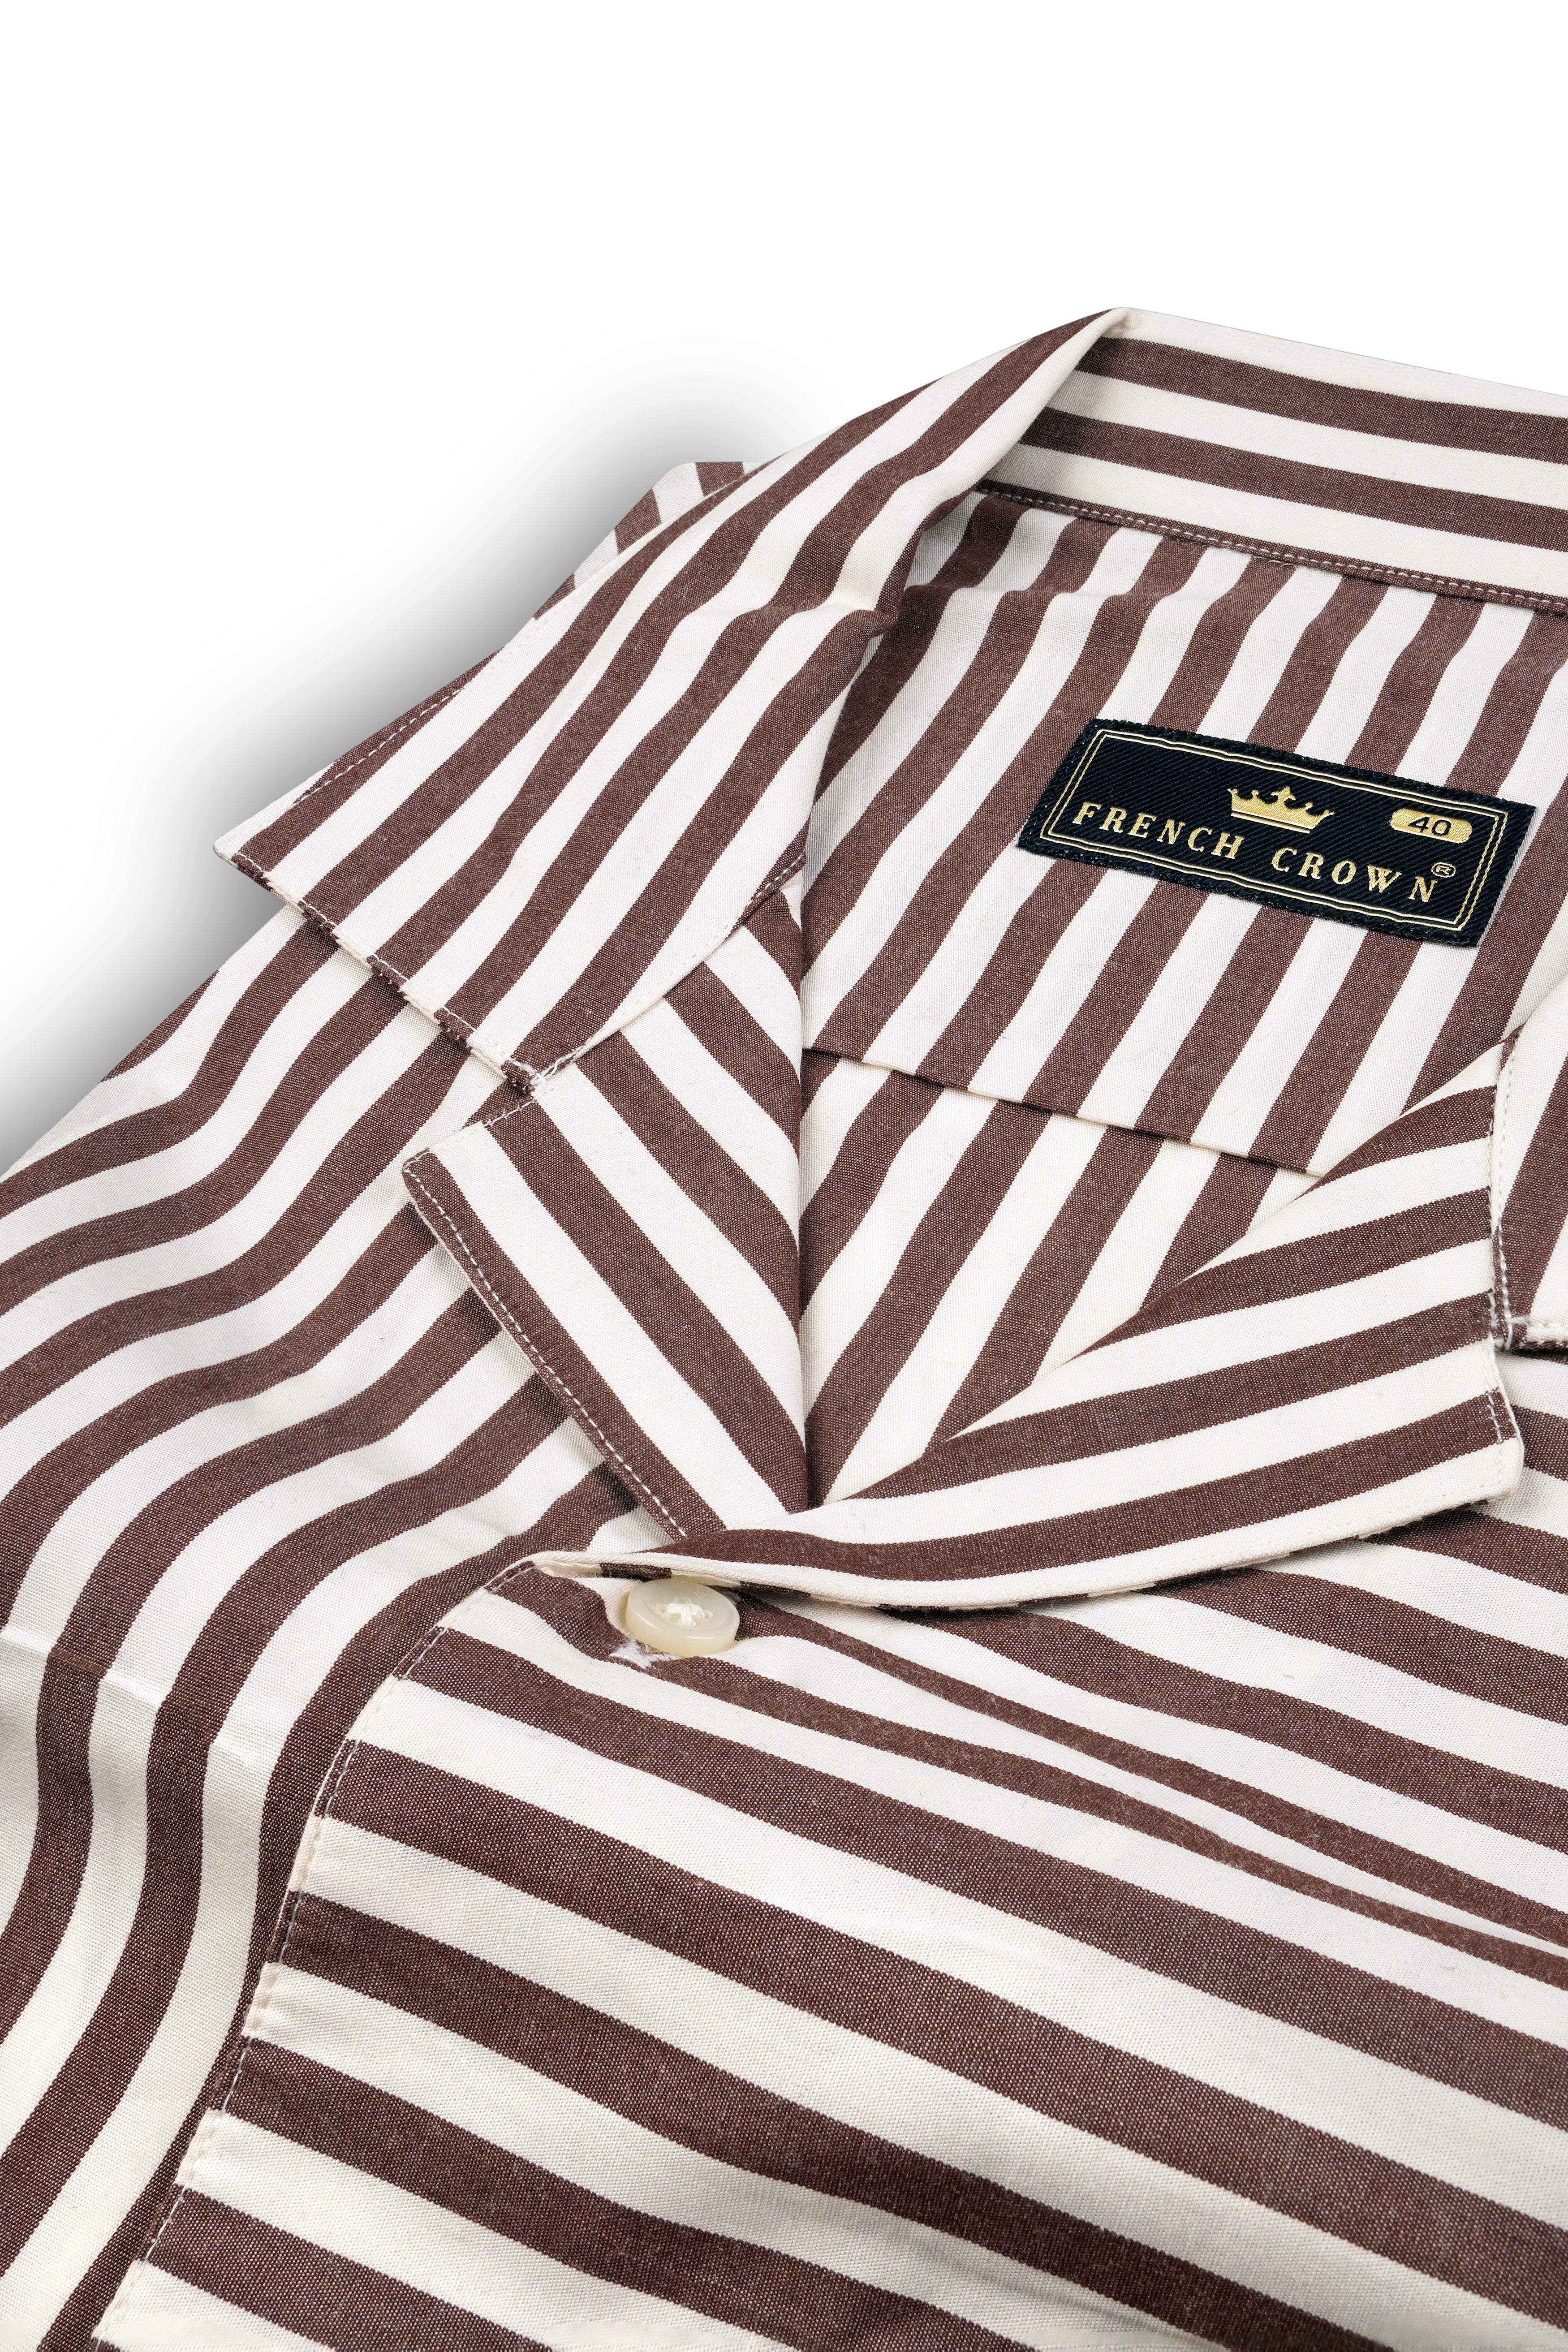 Millbrook Brown and White Striped Premium Cotton Designer Shirt